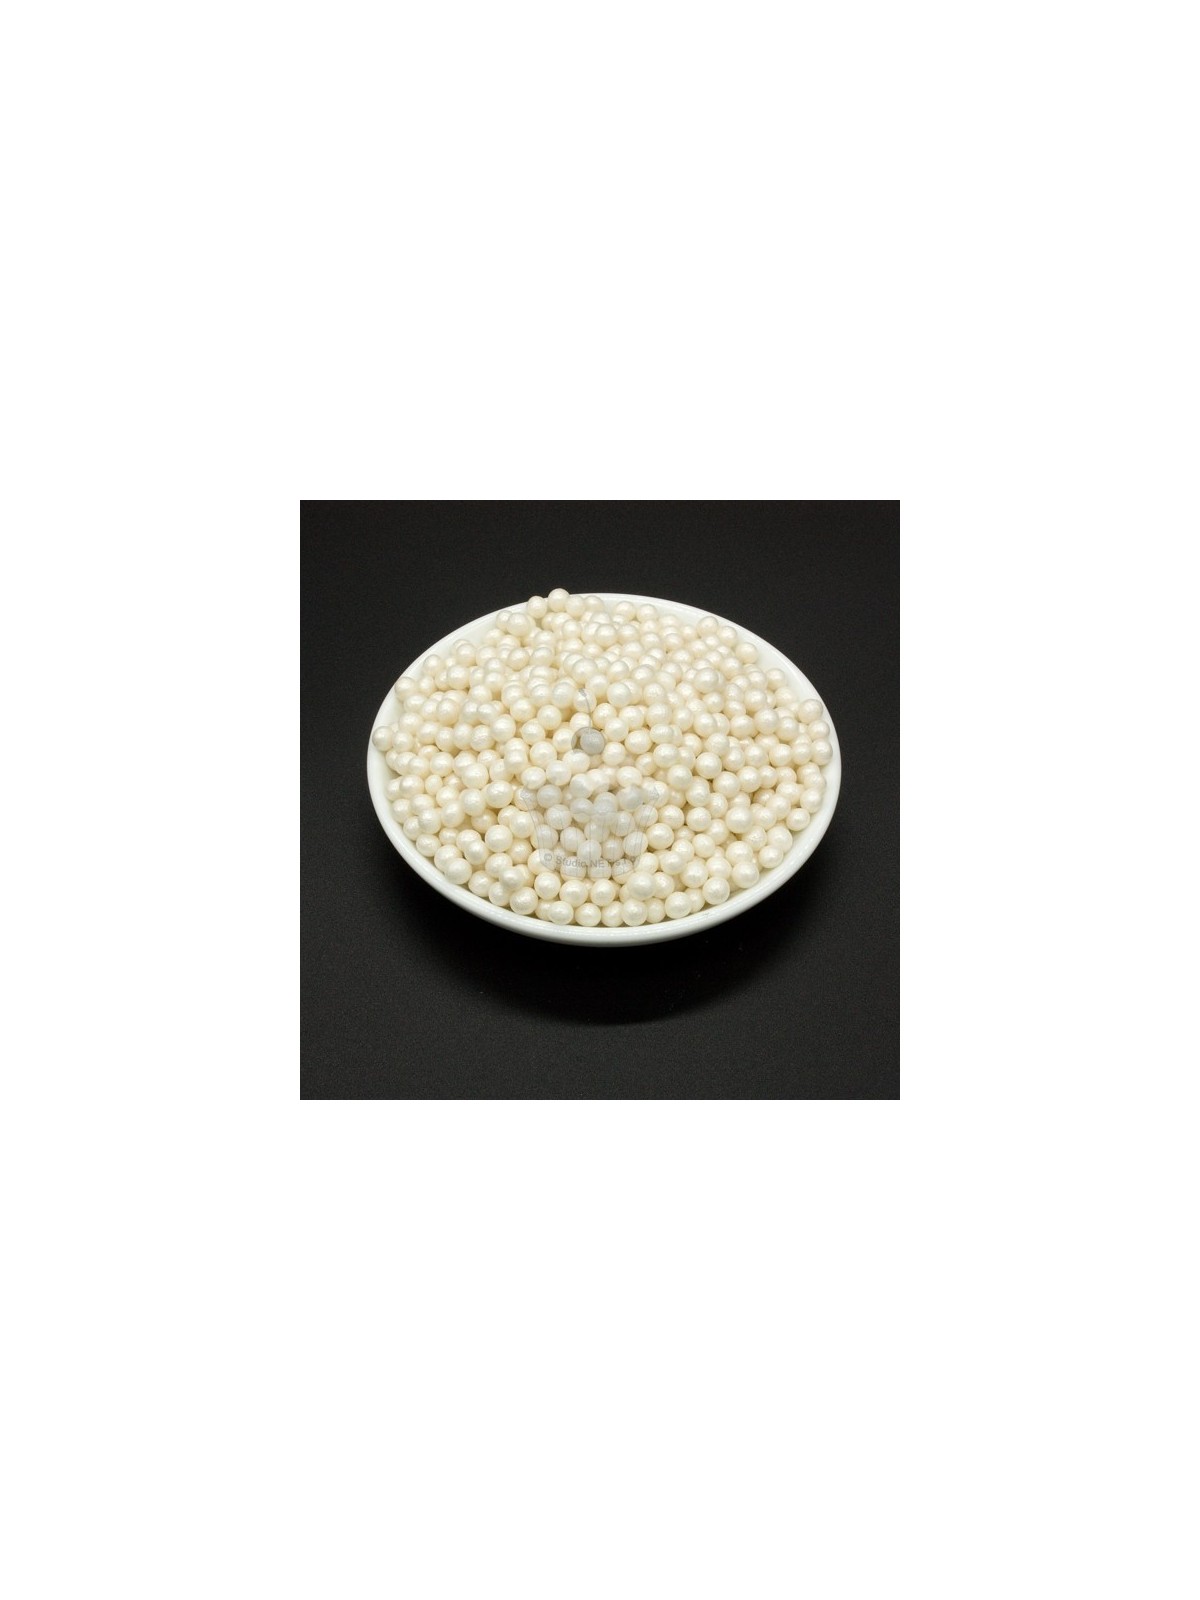 Sugar pearls 4mm pearlwhite - 100g